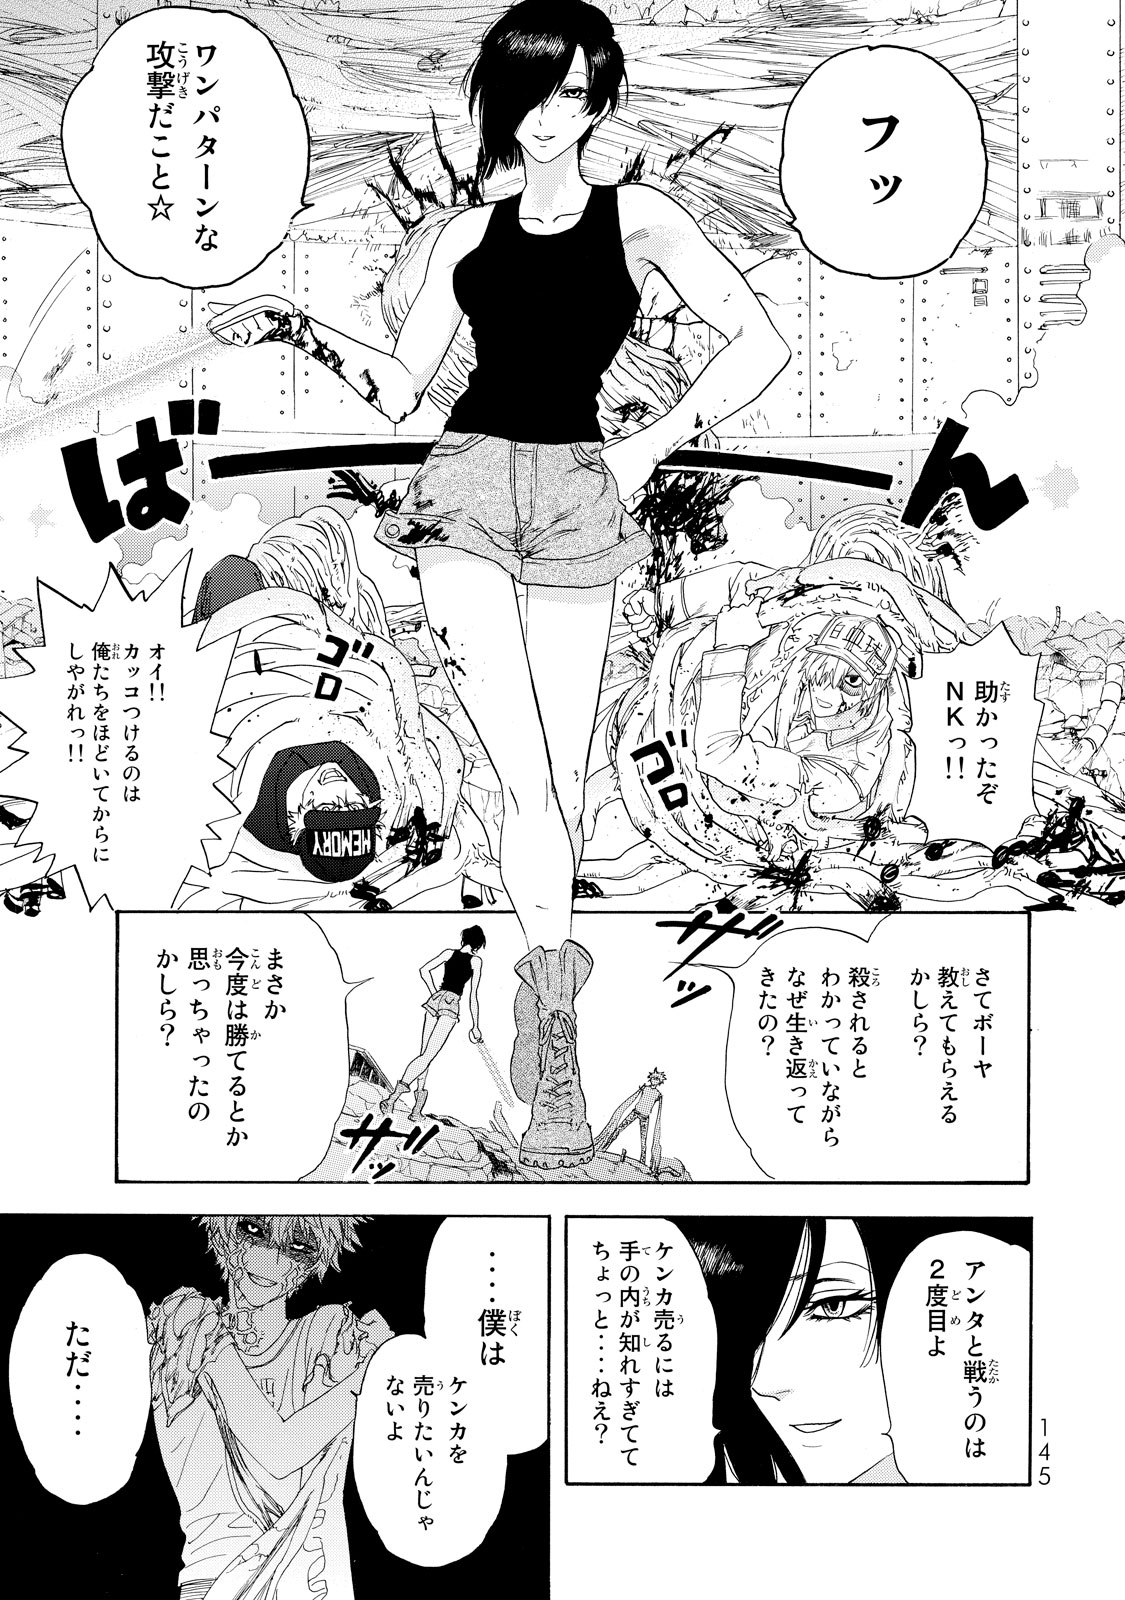 Hataraku Saibou - Chapter 24 - Page 5